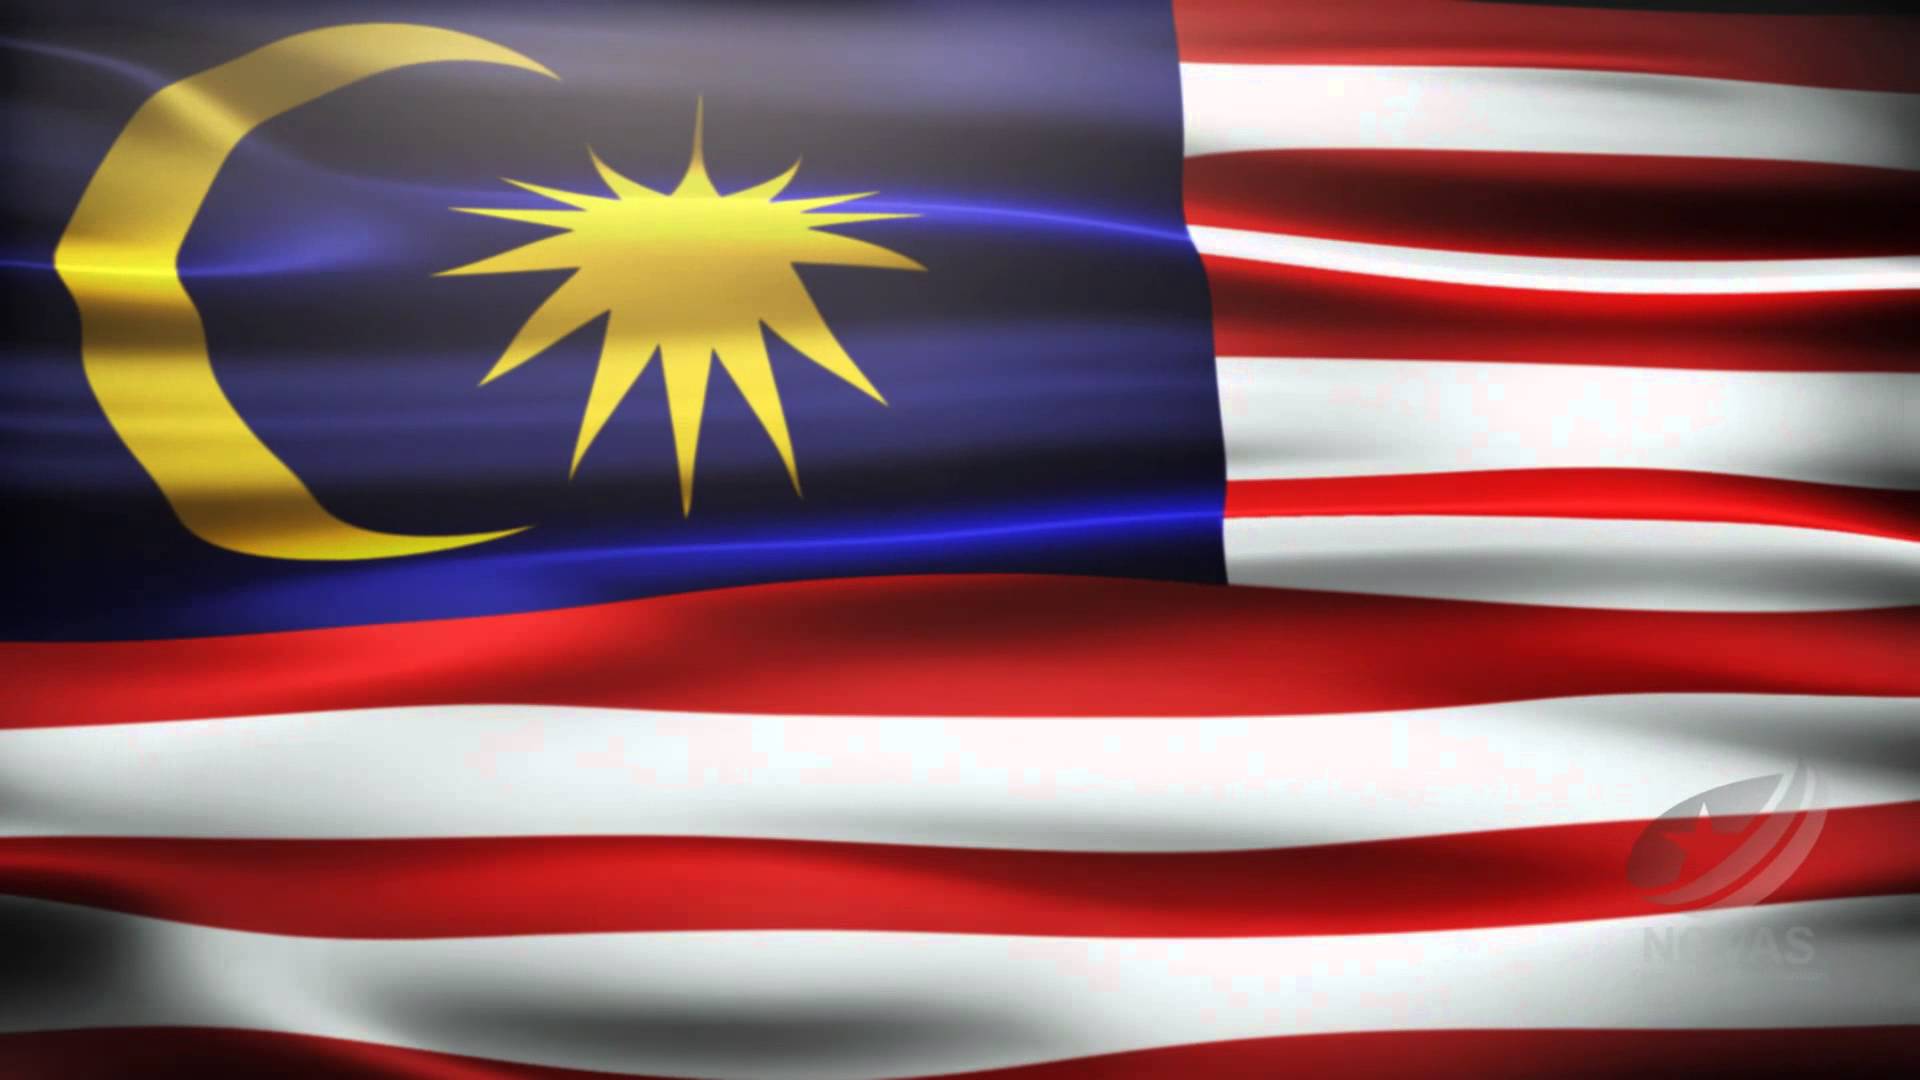 Malaysia Flag Wallpaper. (33++ Wallpaper)